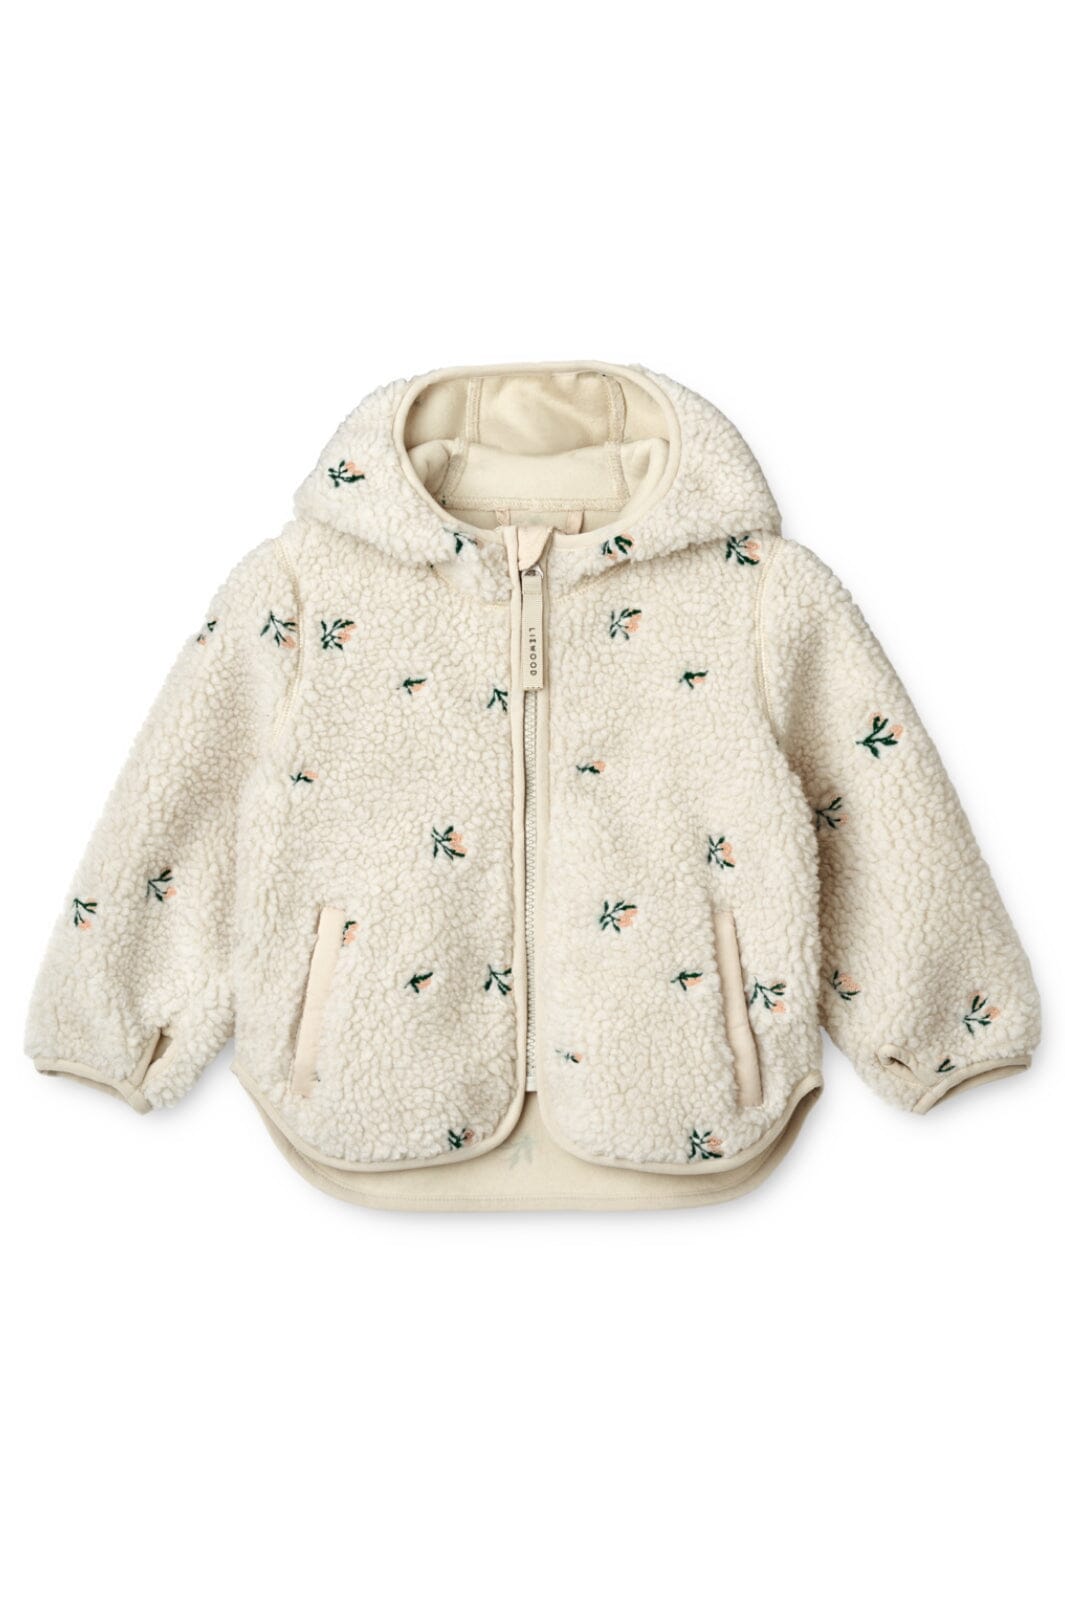 Liewood - Mara Pile Embroidery Jacket With Ears - Peach / Sandy Embroidery Fleece jakker 